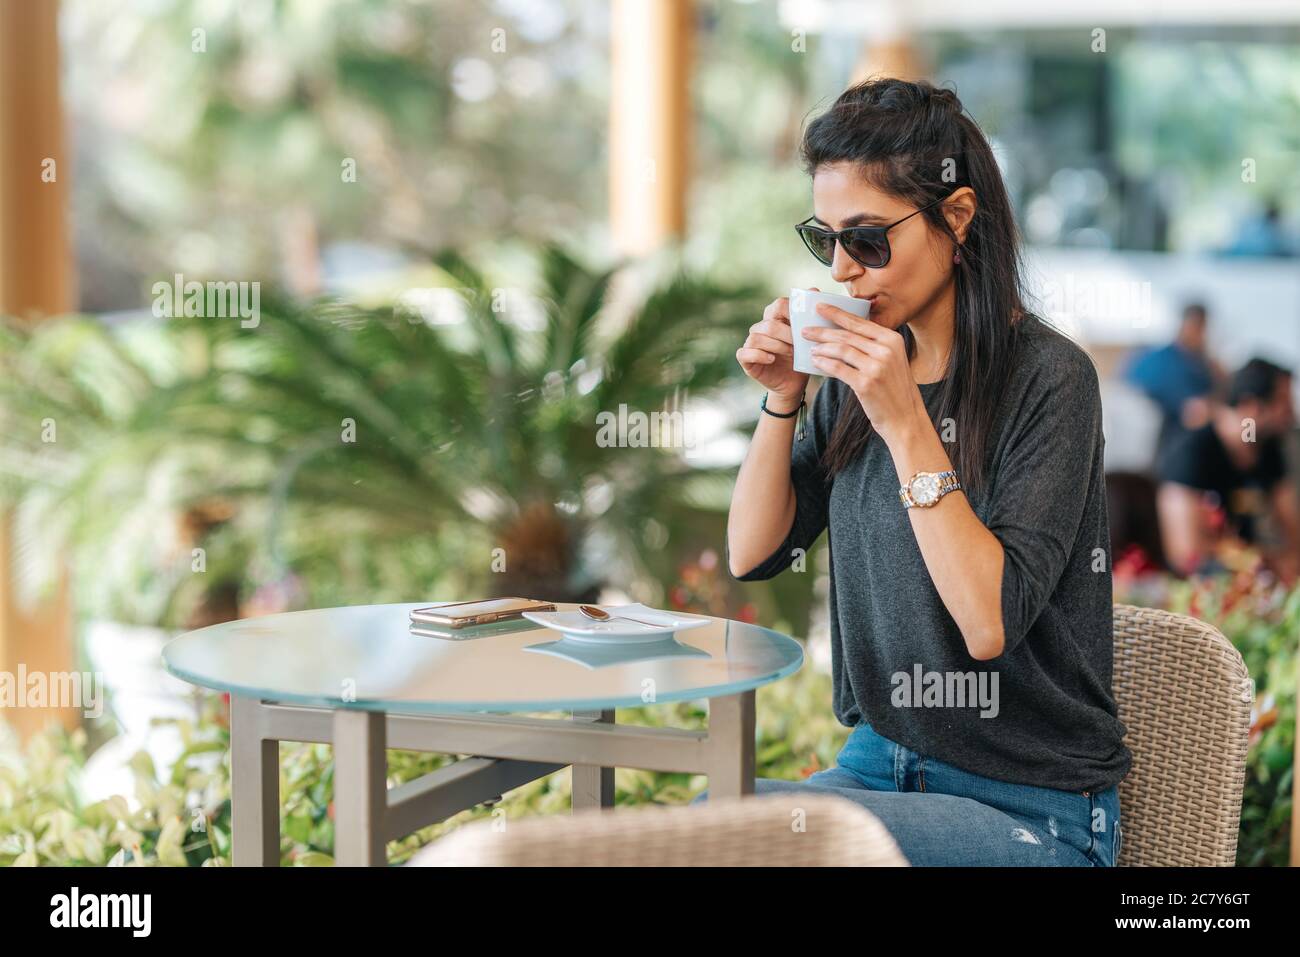 La giovane donna è seduta e beve una tazza di bevanda calda in un caffè elegante. . Foto di alta qualità Foto Stock